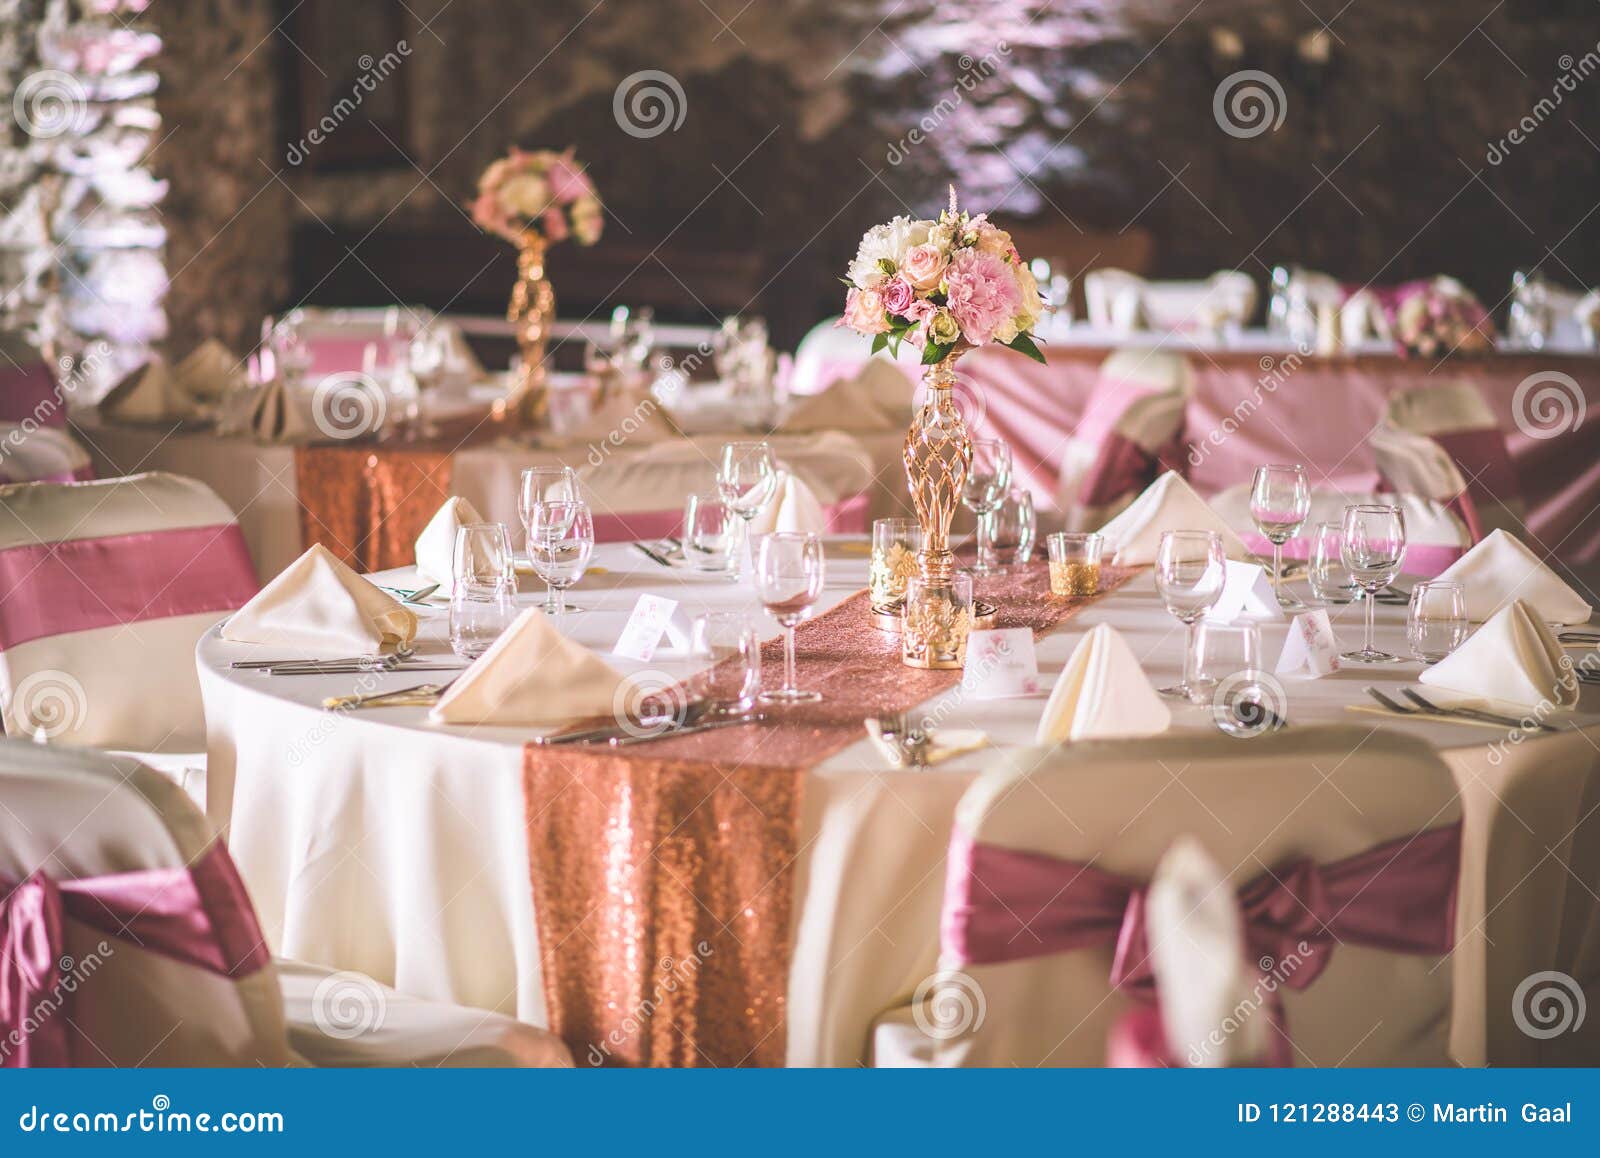 100-1000 Metallic Gold Rose Petals Wedding Celebration Table Aisle Décor 